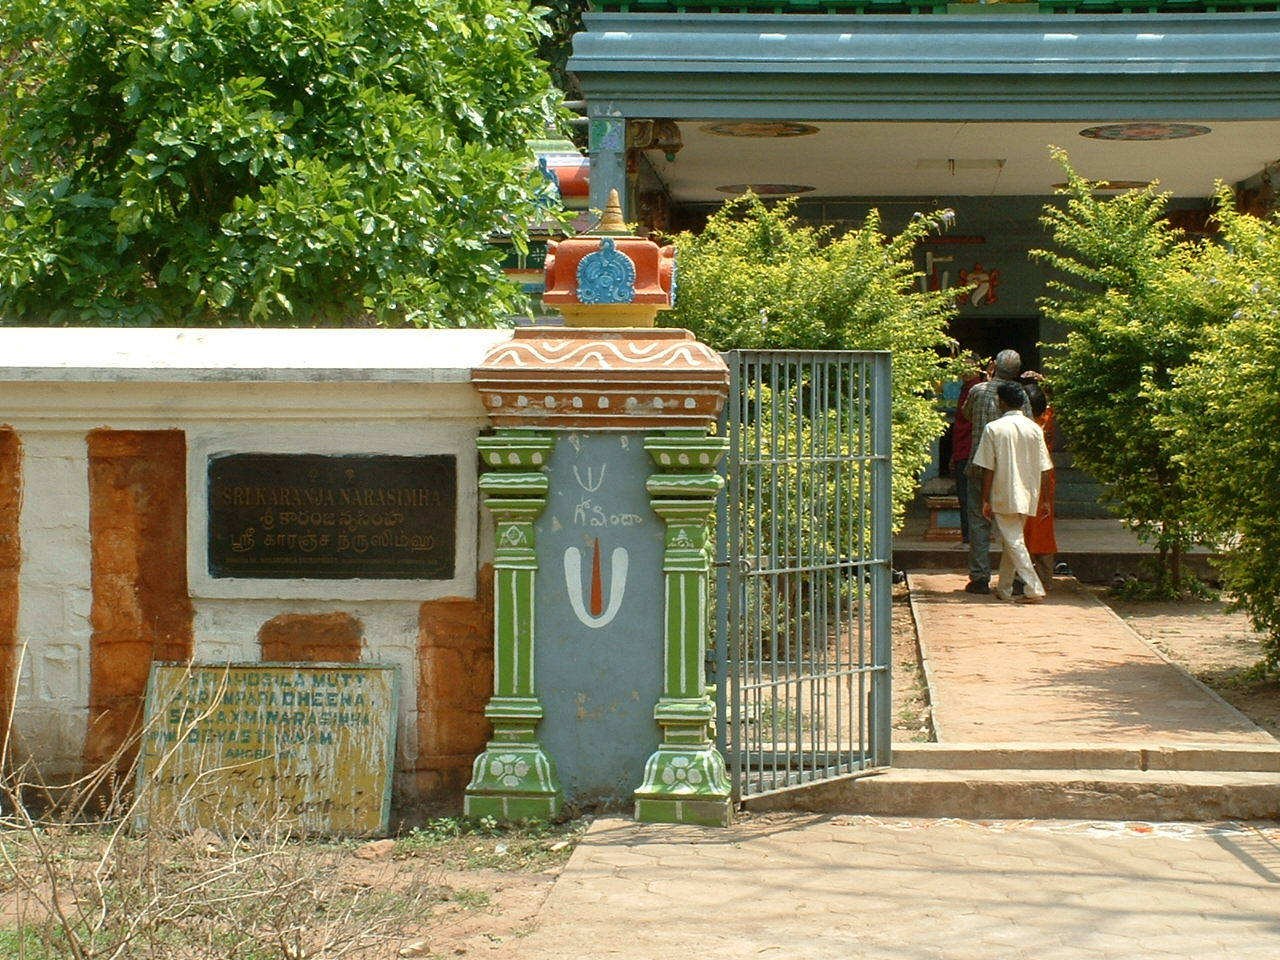 Karanja Narasimha Swamy Temple